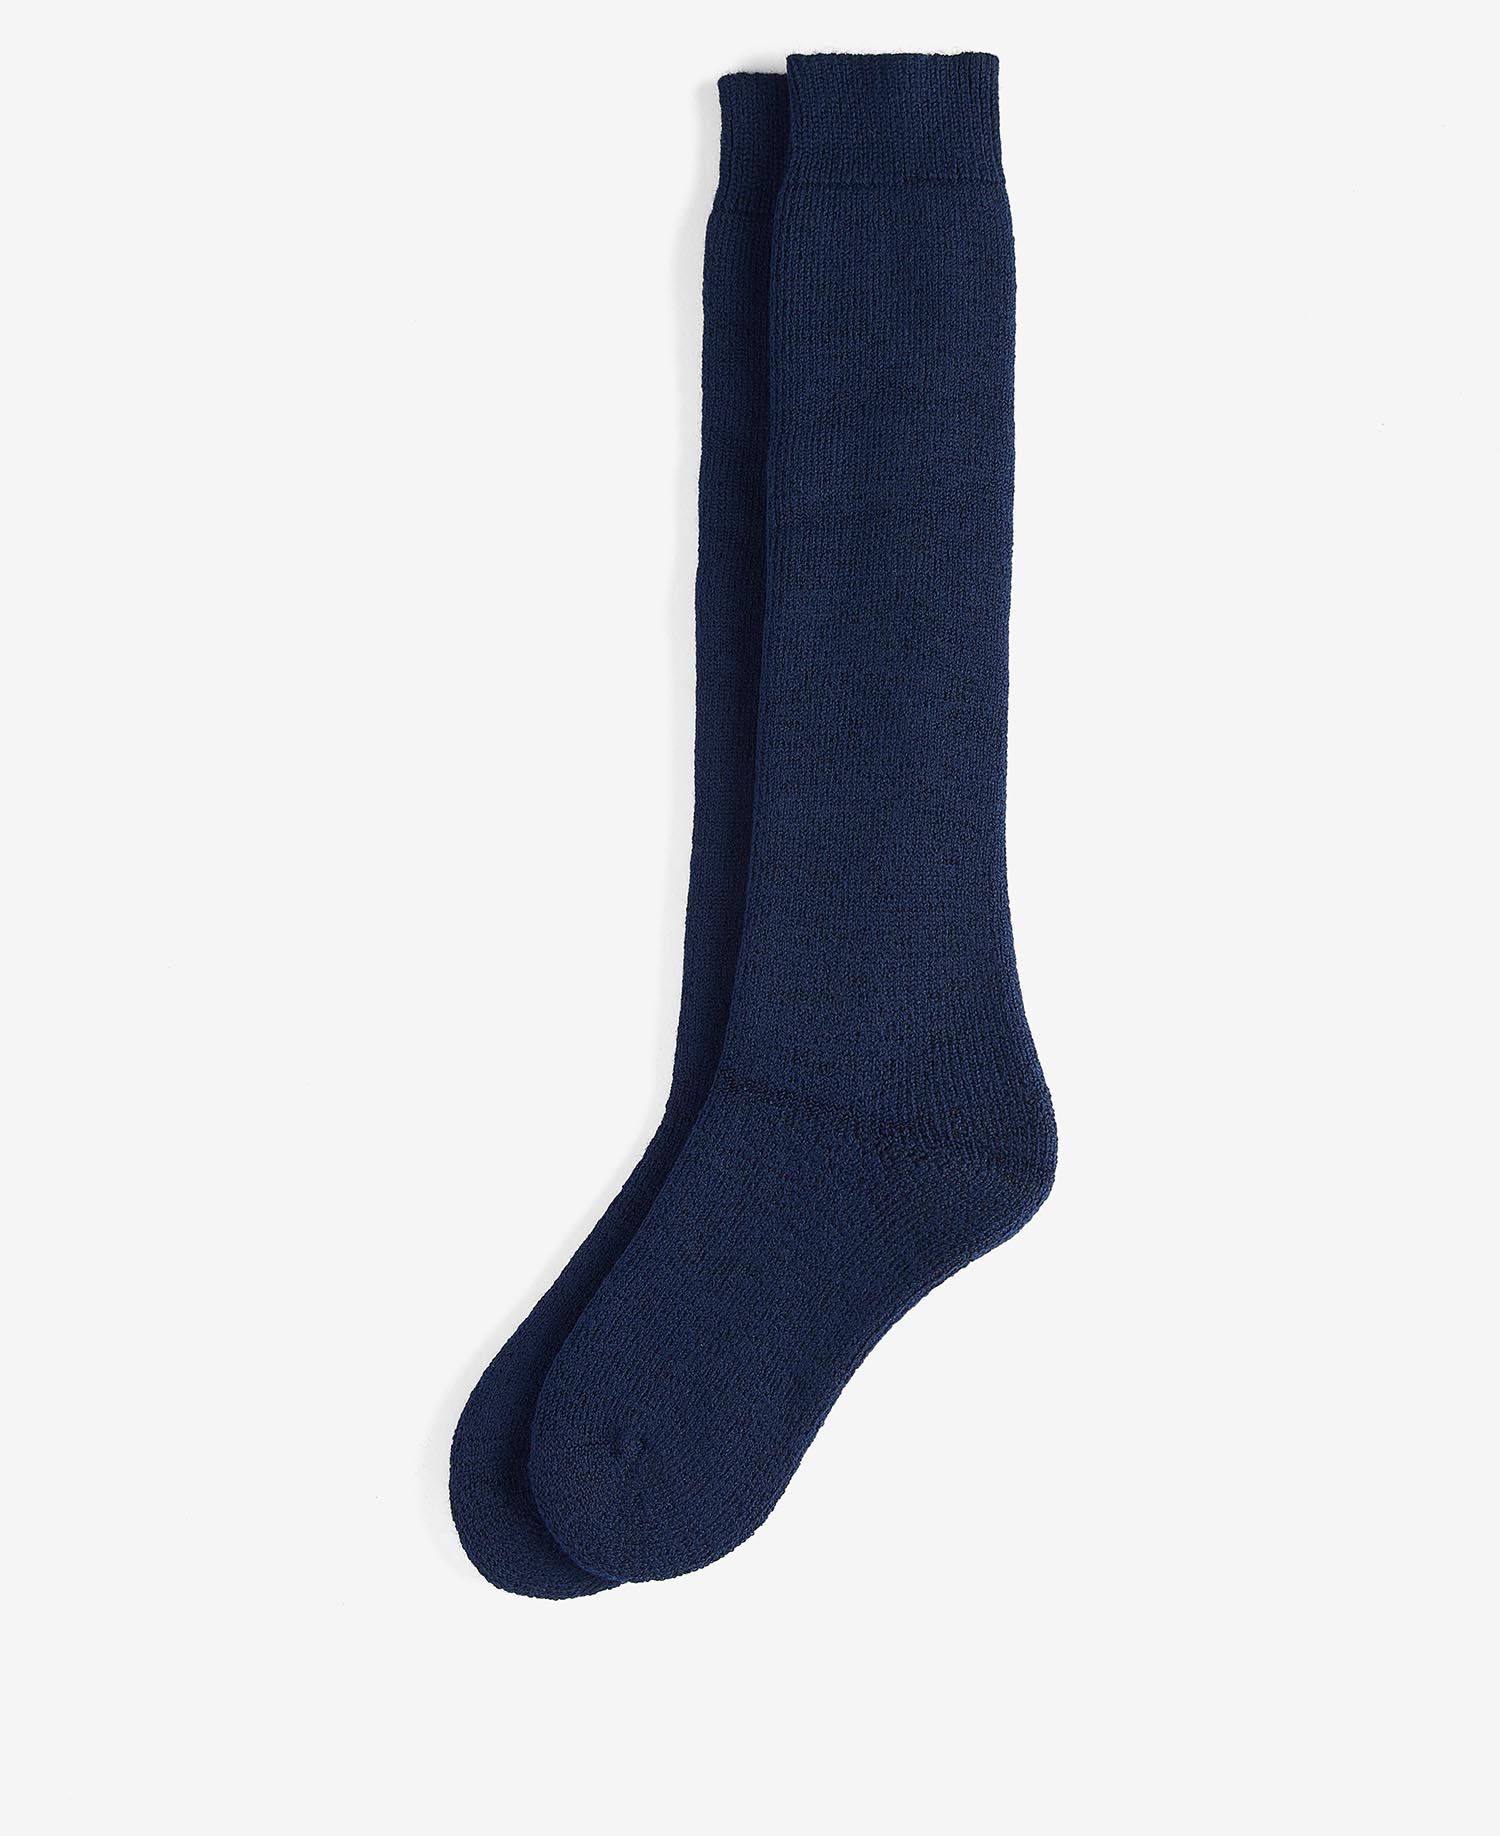 Barbour Wellington Knee-High Socks